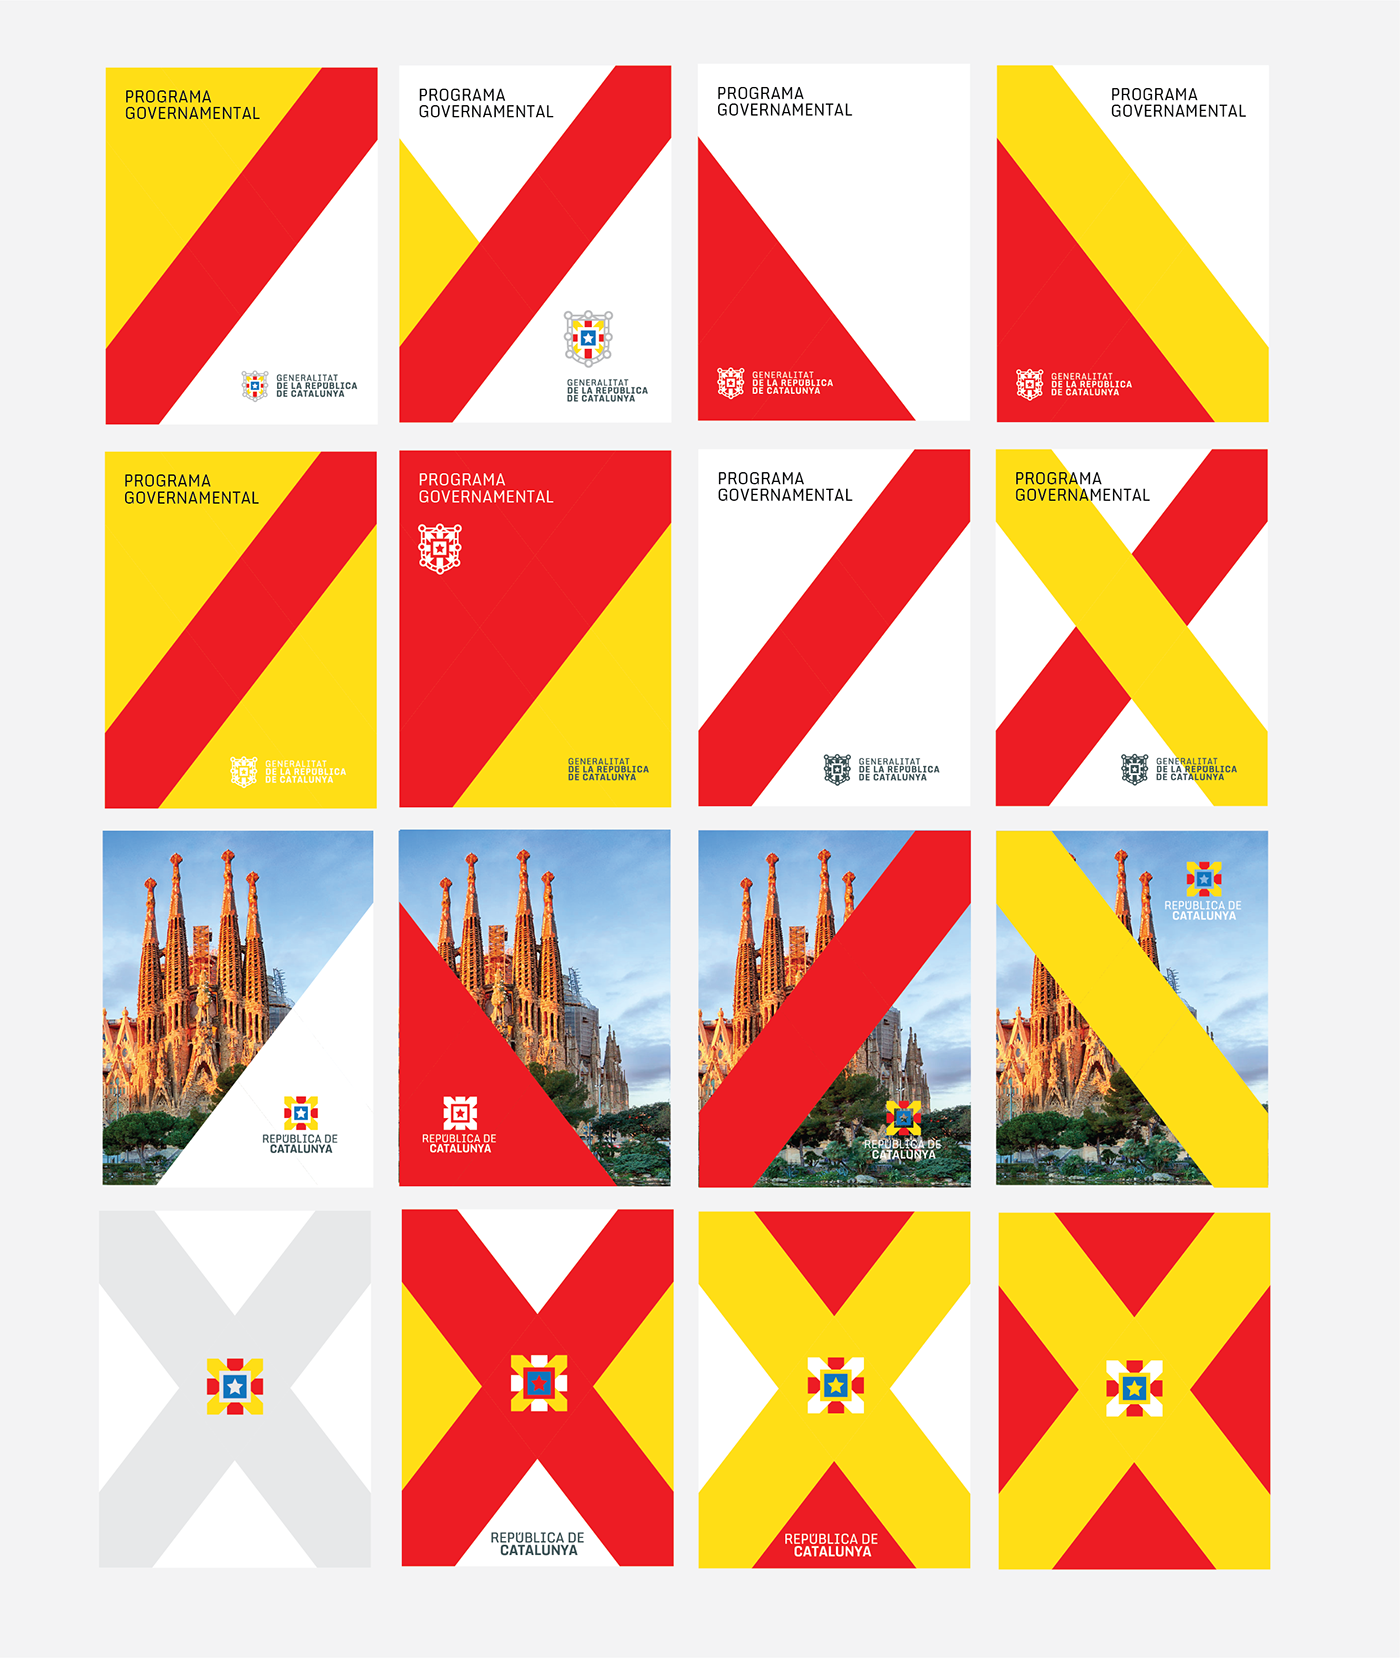 catalonia barcelona catalunya Republic logo brand coat of arms spain